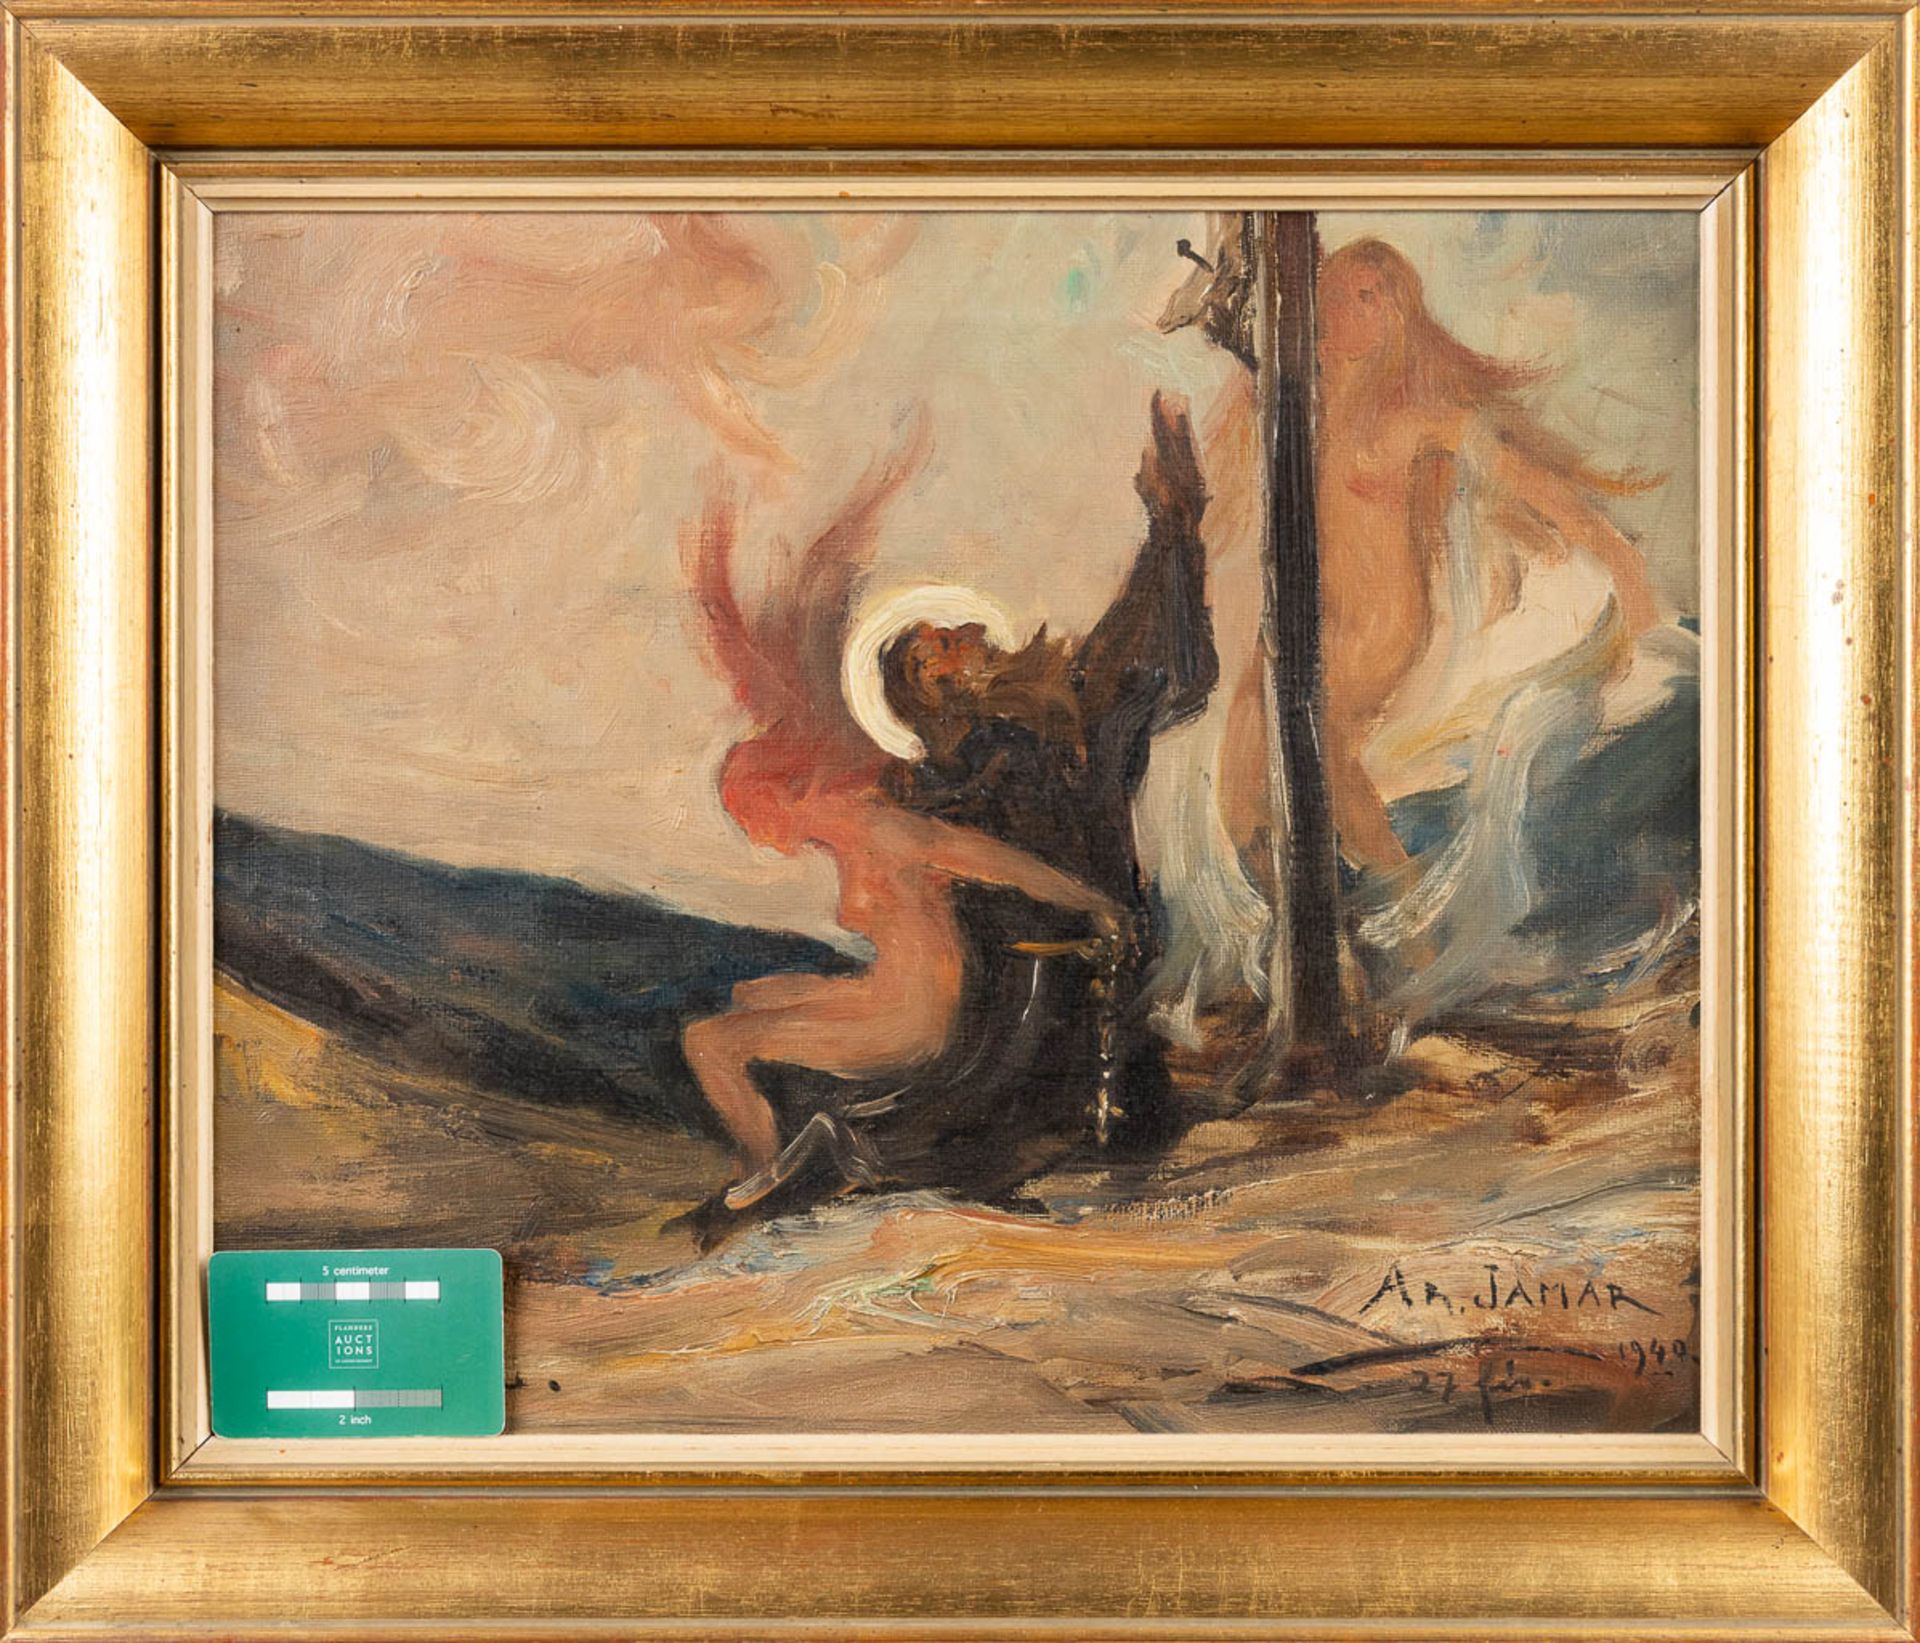 ArmandÊJAMAR (1870-1946) 'Tentation De Antoine' oil on canvas. 1949. (45 x 37cm) - Image 5 of 8